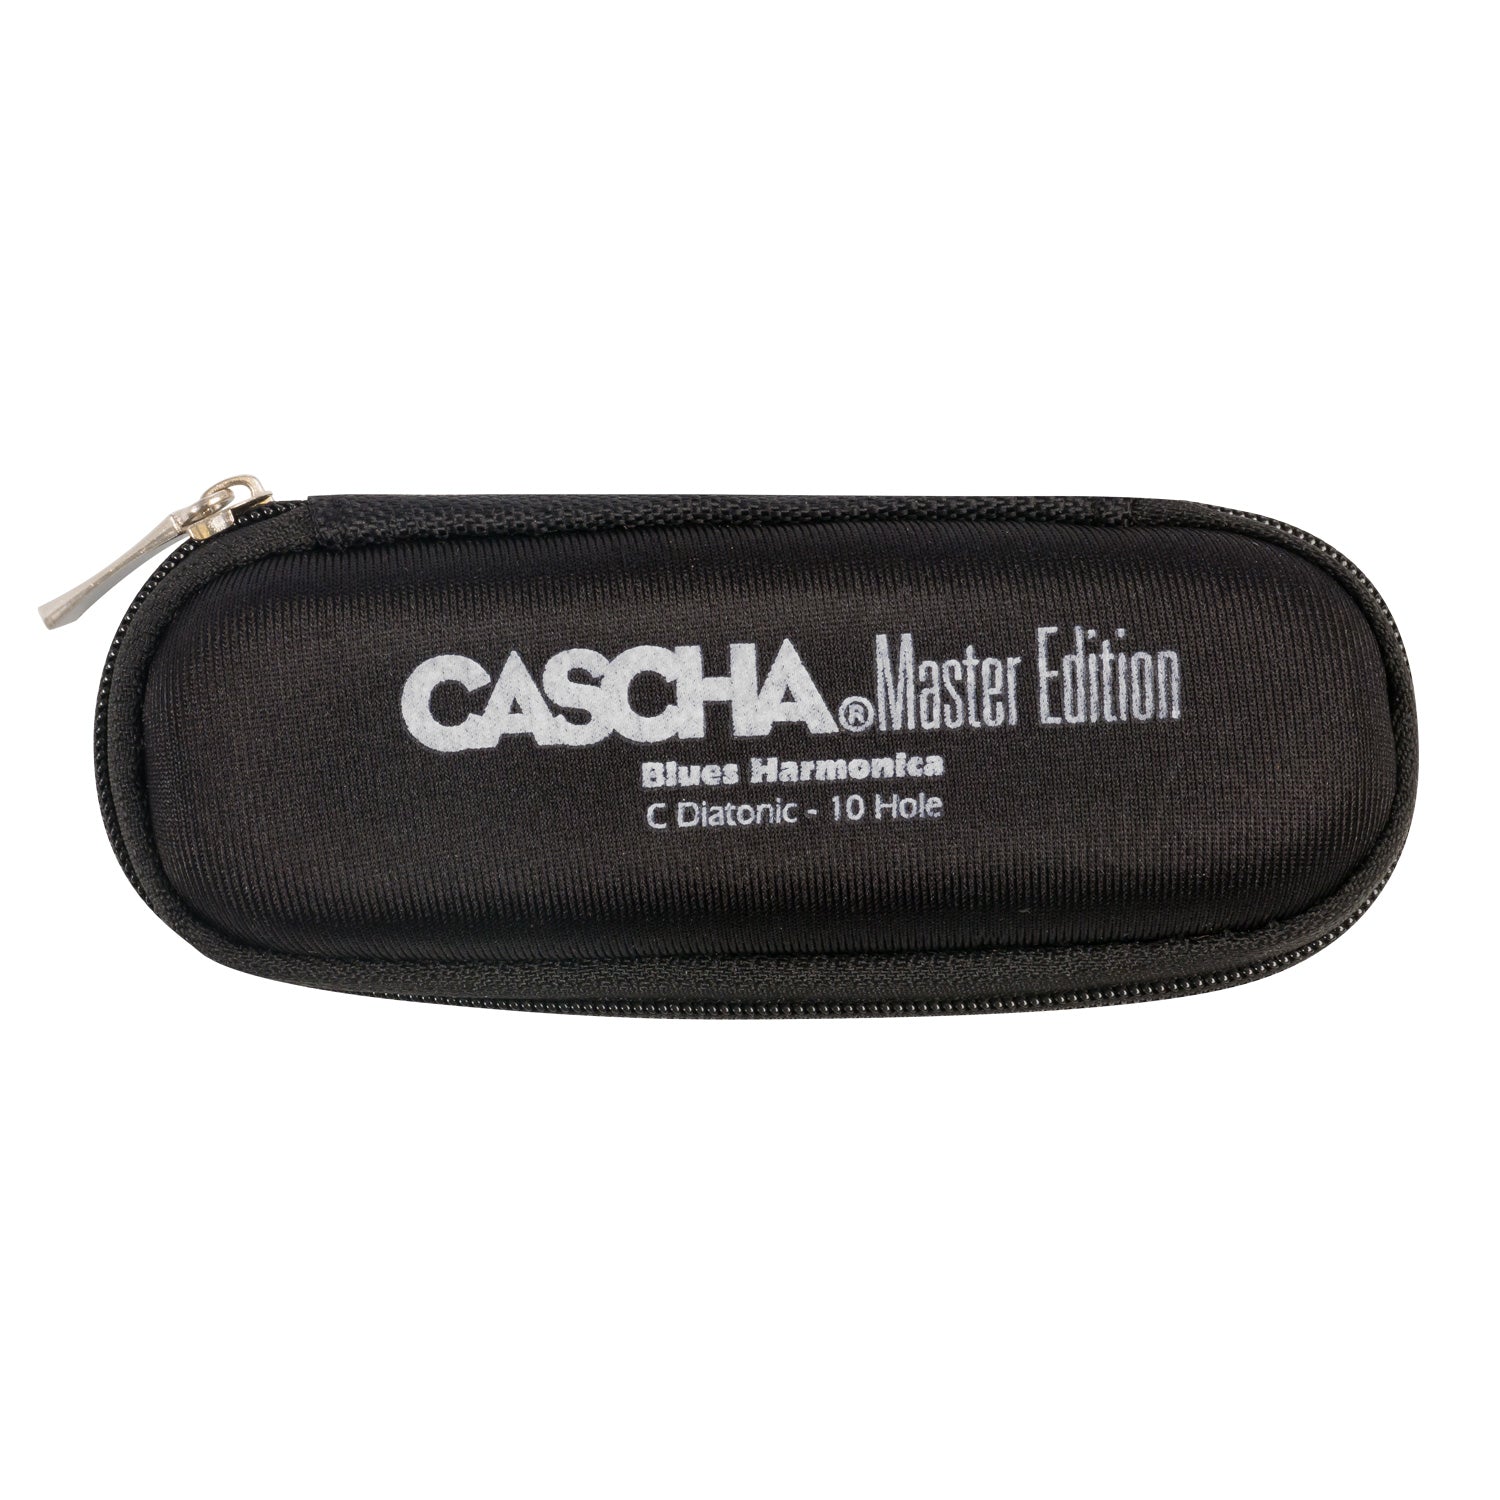 Cascha Master Edition Blues Harmonica in C Diatonic